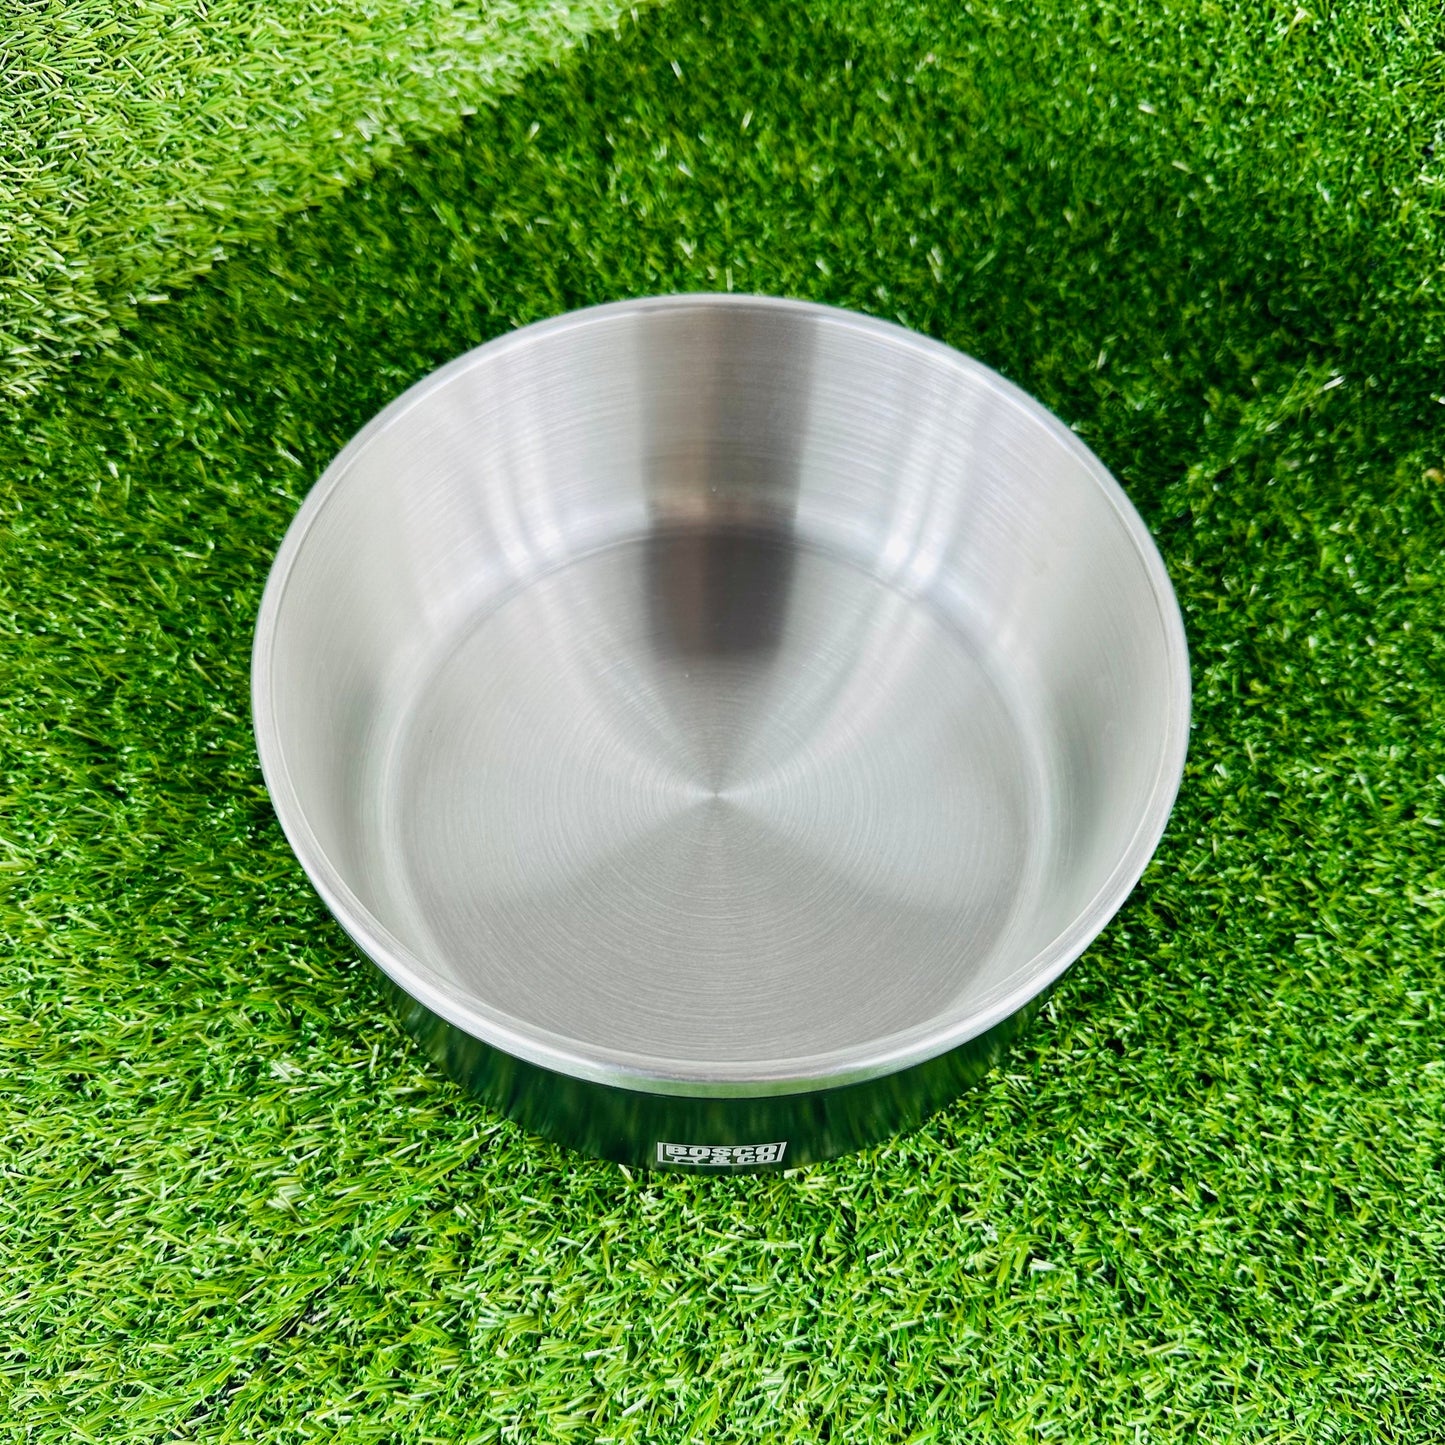 Bosco & CO Double Insulated Dog Bowl - Inside